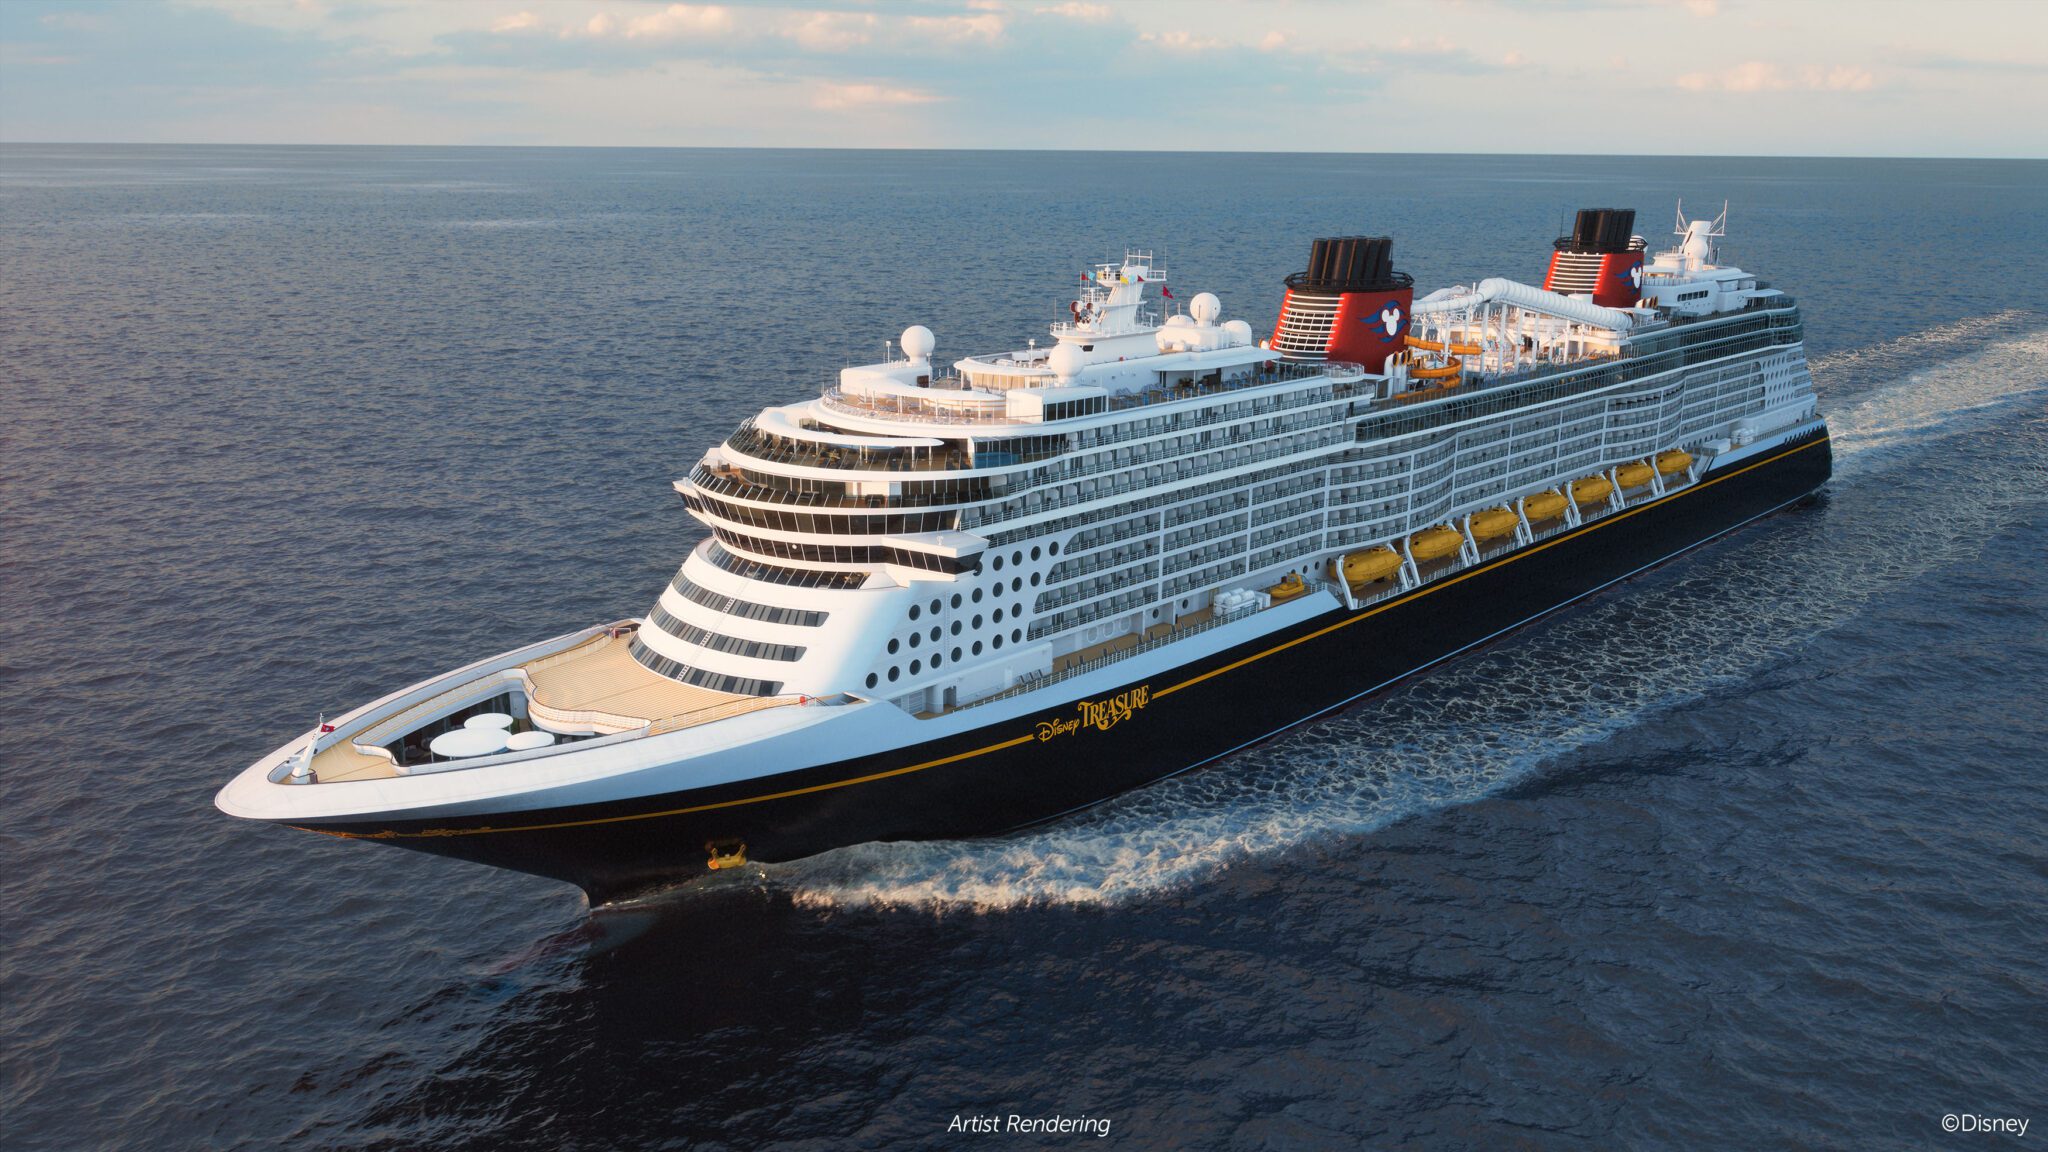 Artists rendition of the exterior of Disney Cruise Line's new Disney Treasure